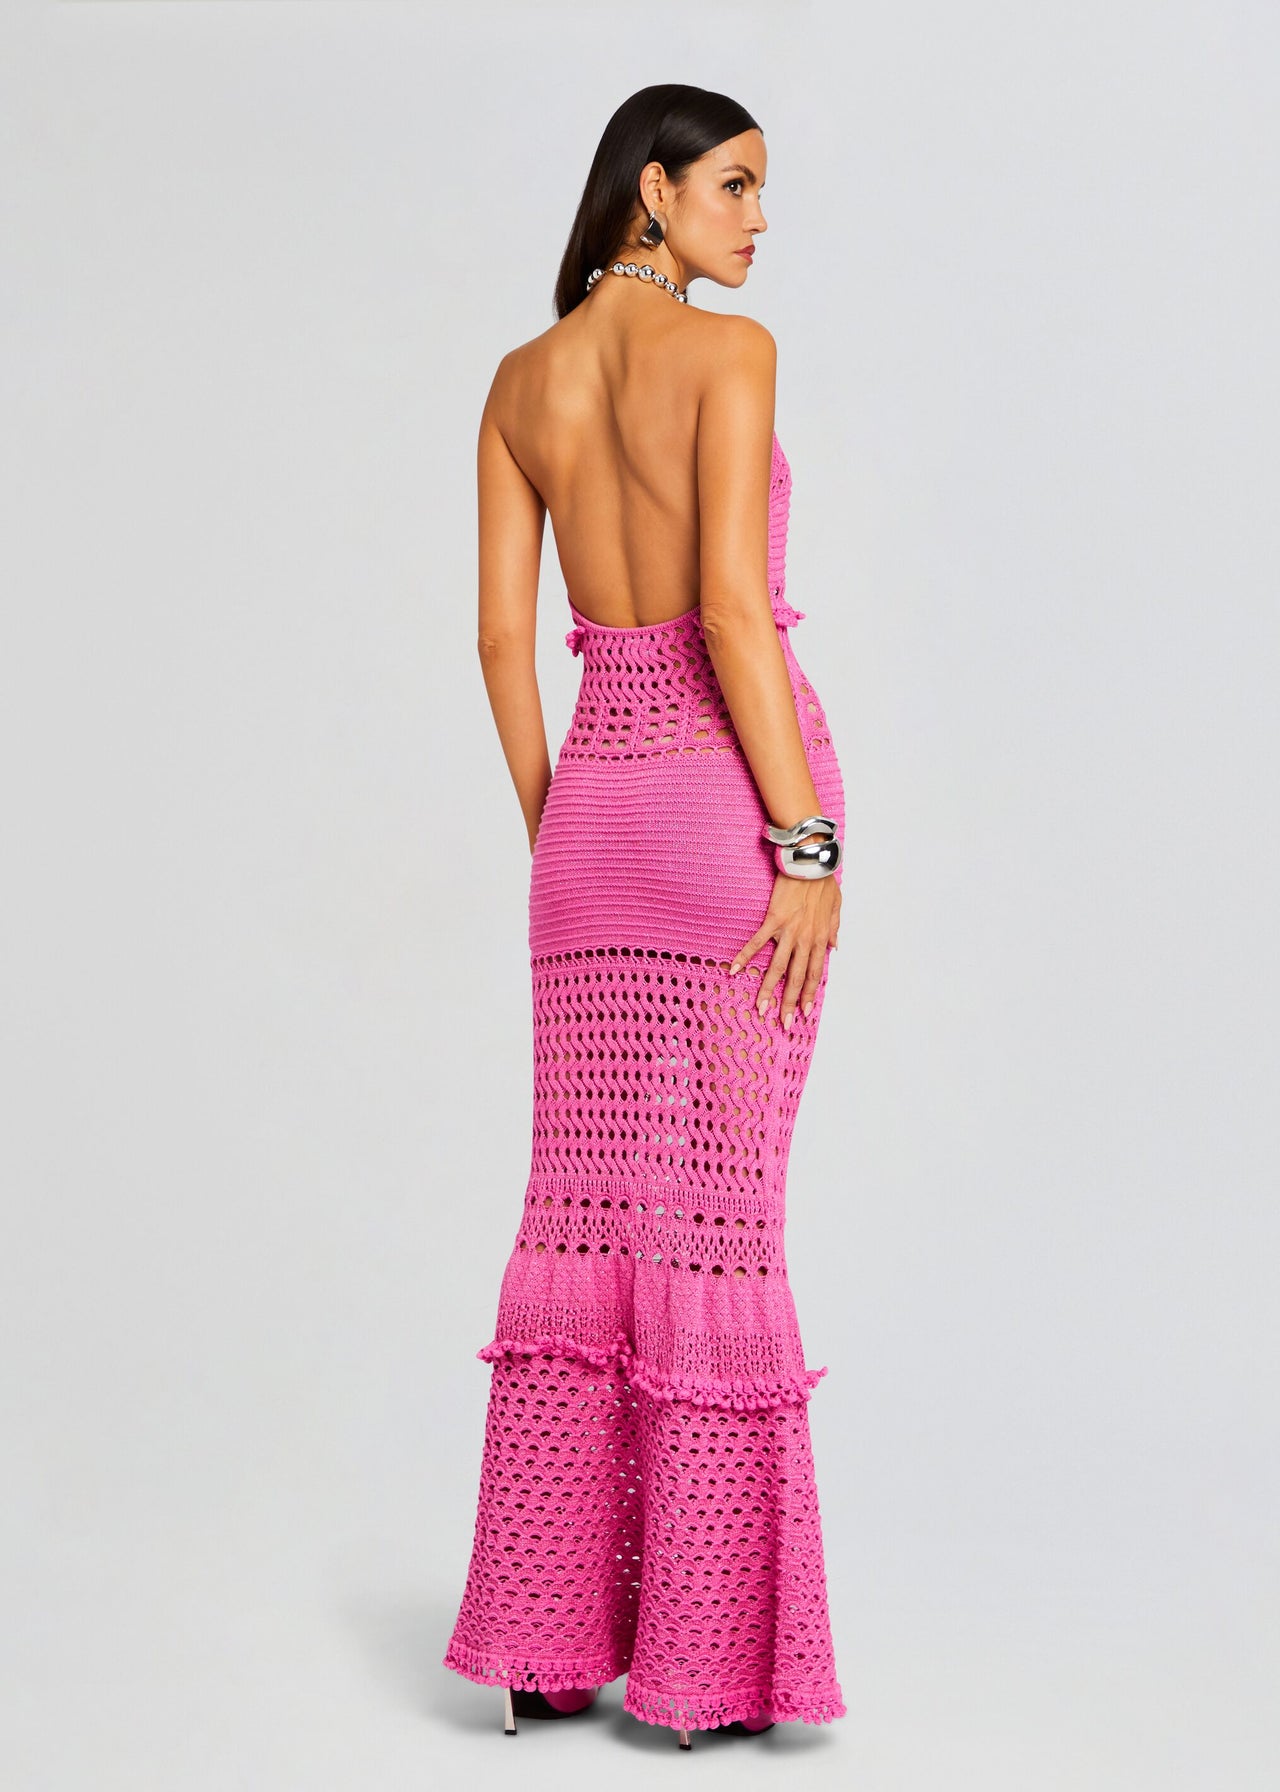 Mesa Knit Crochet Dress